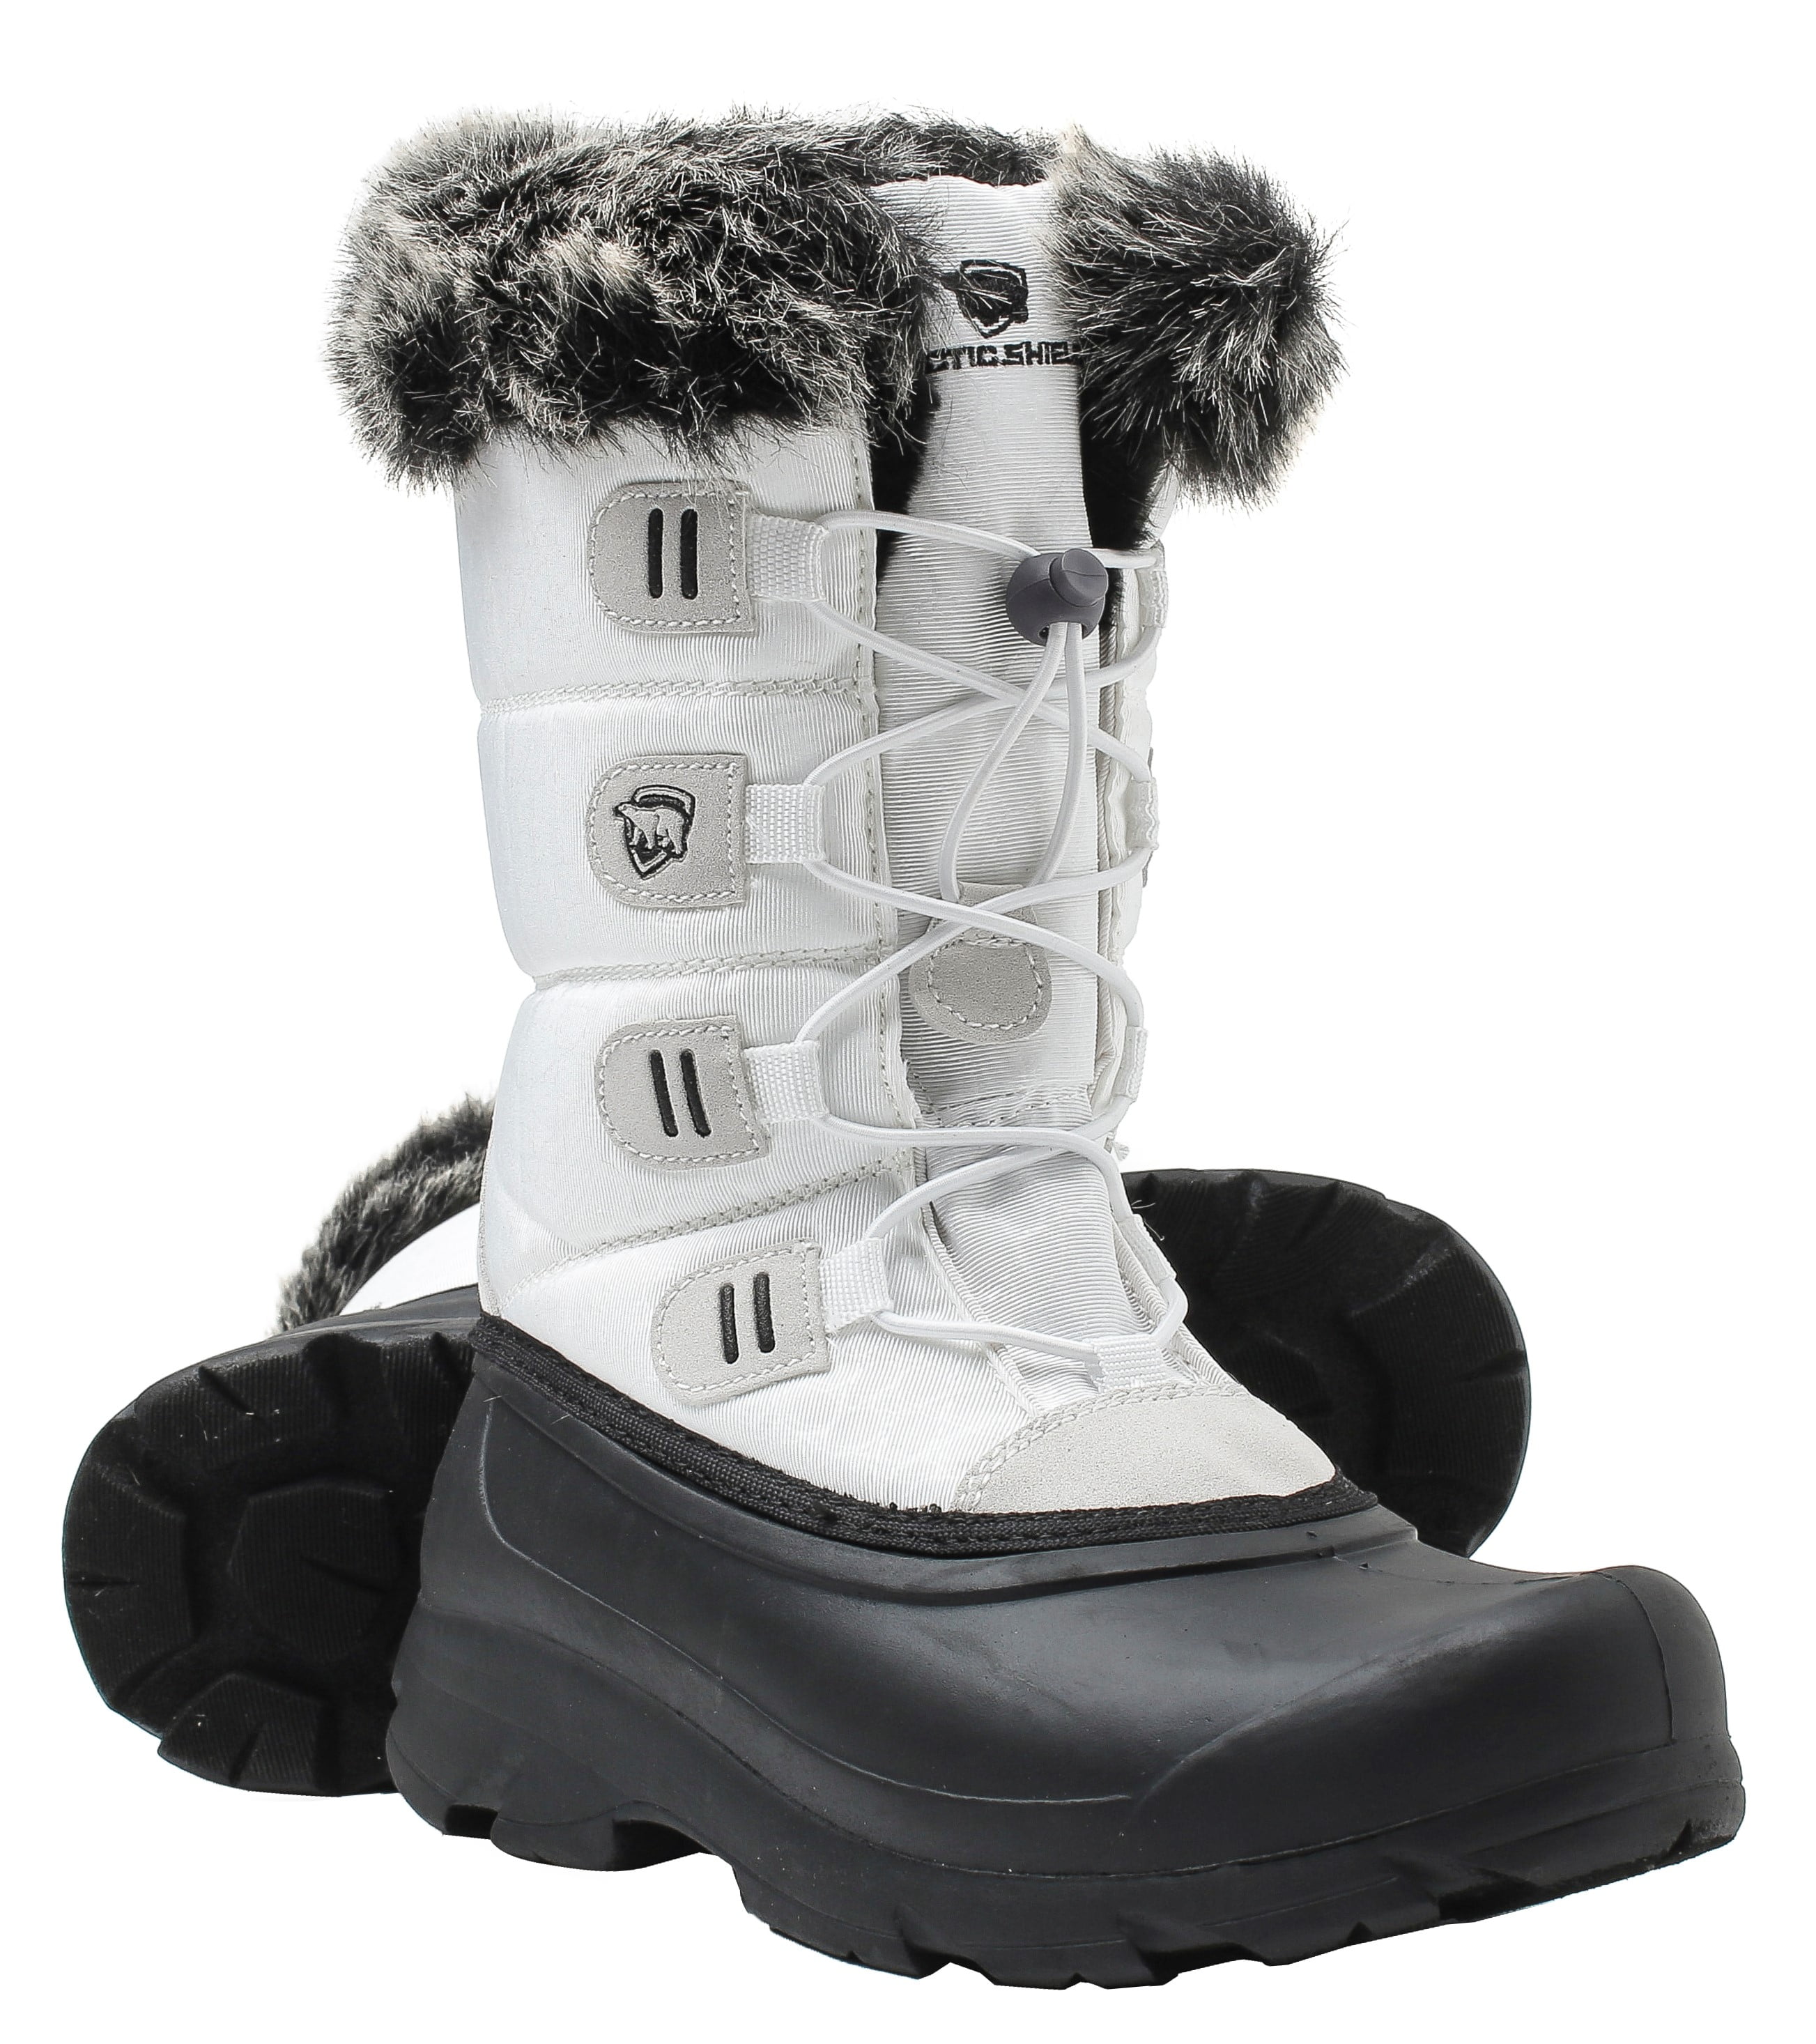 arctic shield boots walmart